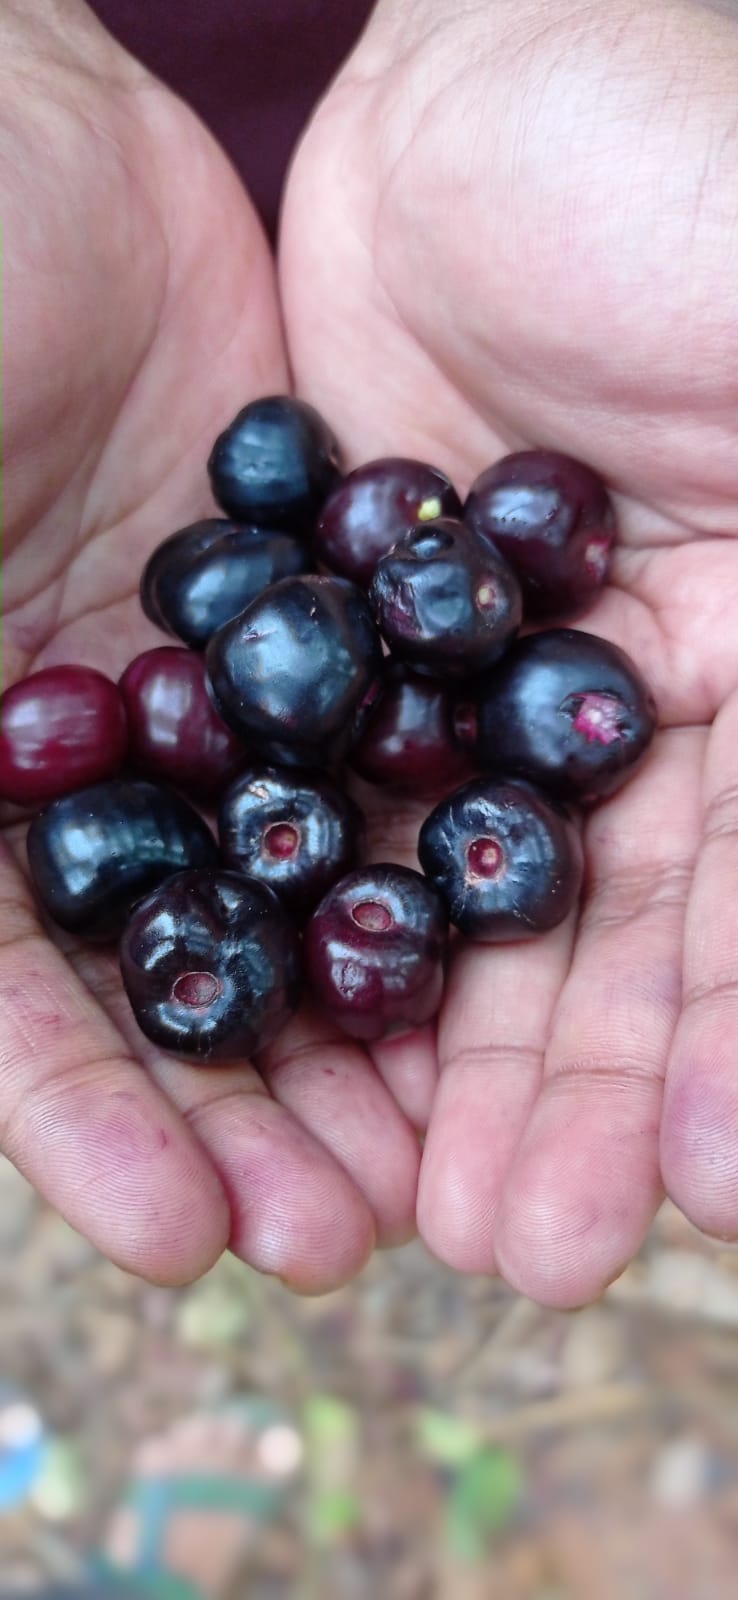 The Wild Jamun Fruit: A Taste of Tamil Nadu's Natural Bounty